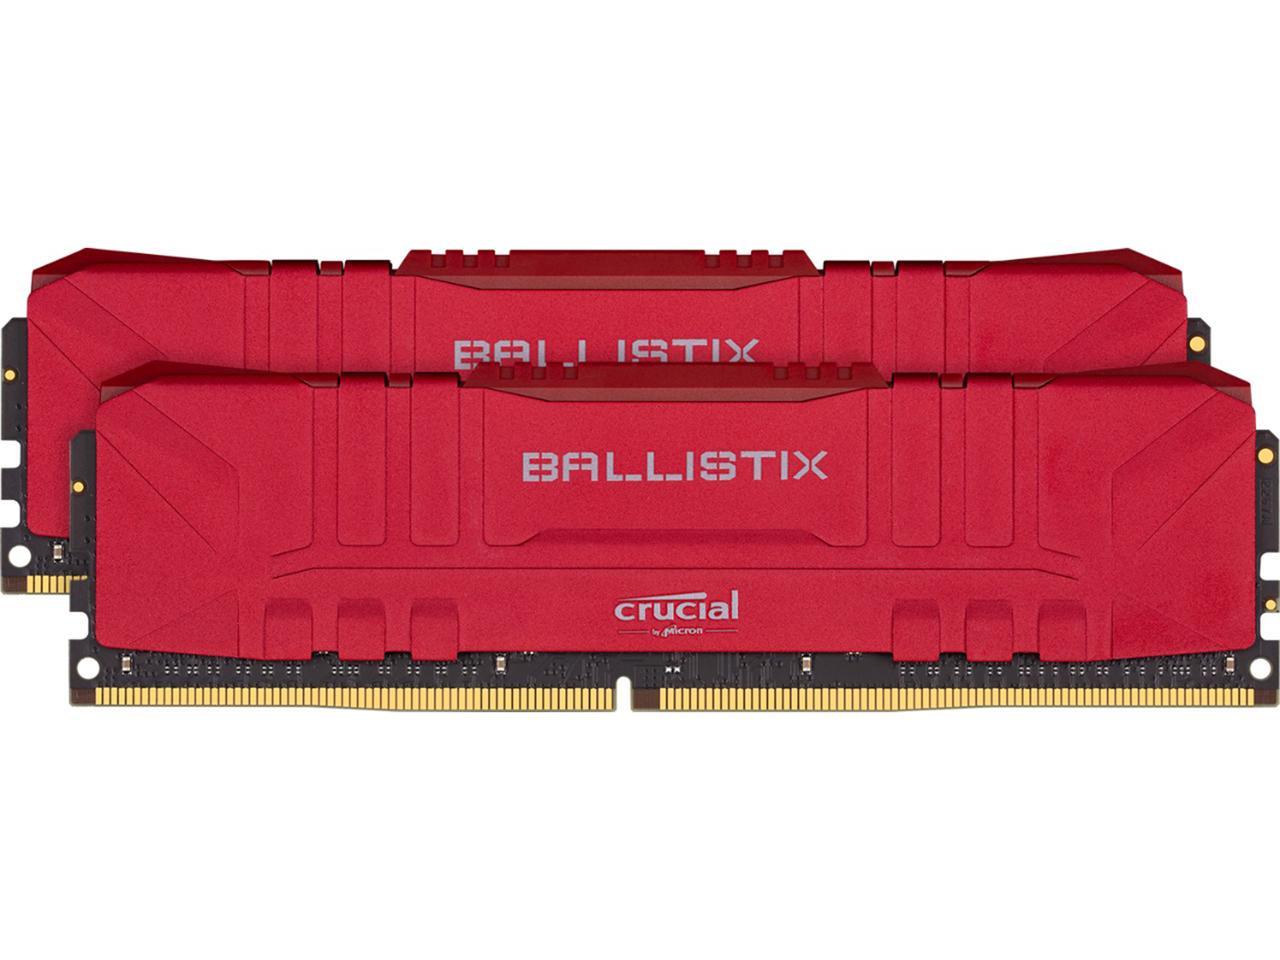 Crucial Ballistix 16GB (2 x 8GB) 288-Pin DDR4 SDRAM DDR4 3000 (PC4 24000) Desktop Memory Model BL2K8G30C15U4R